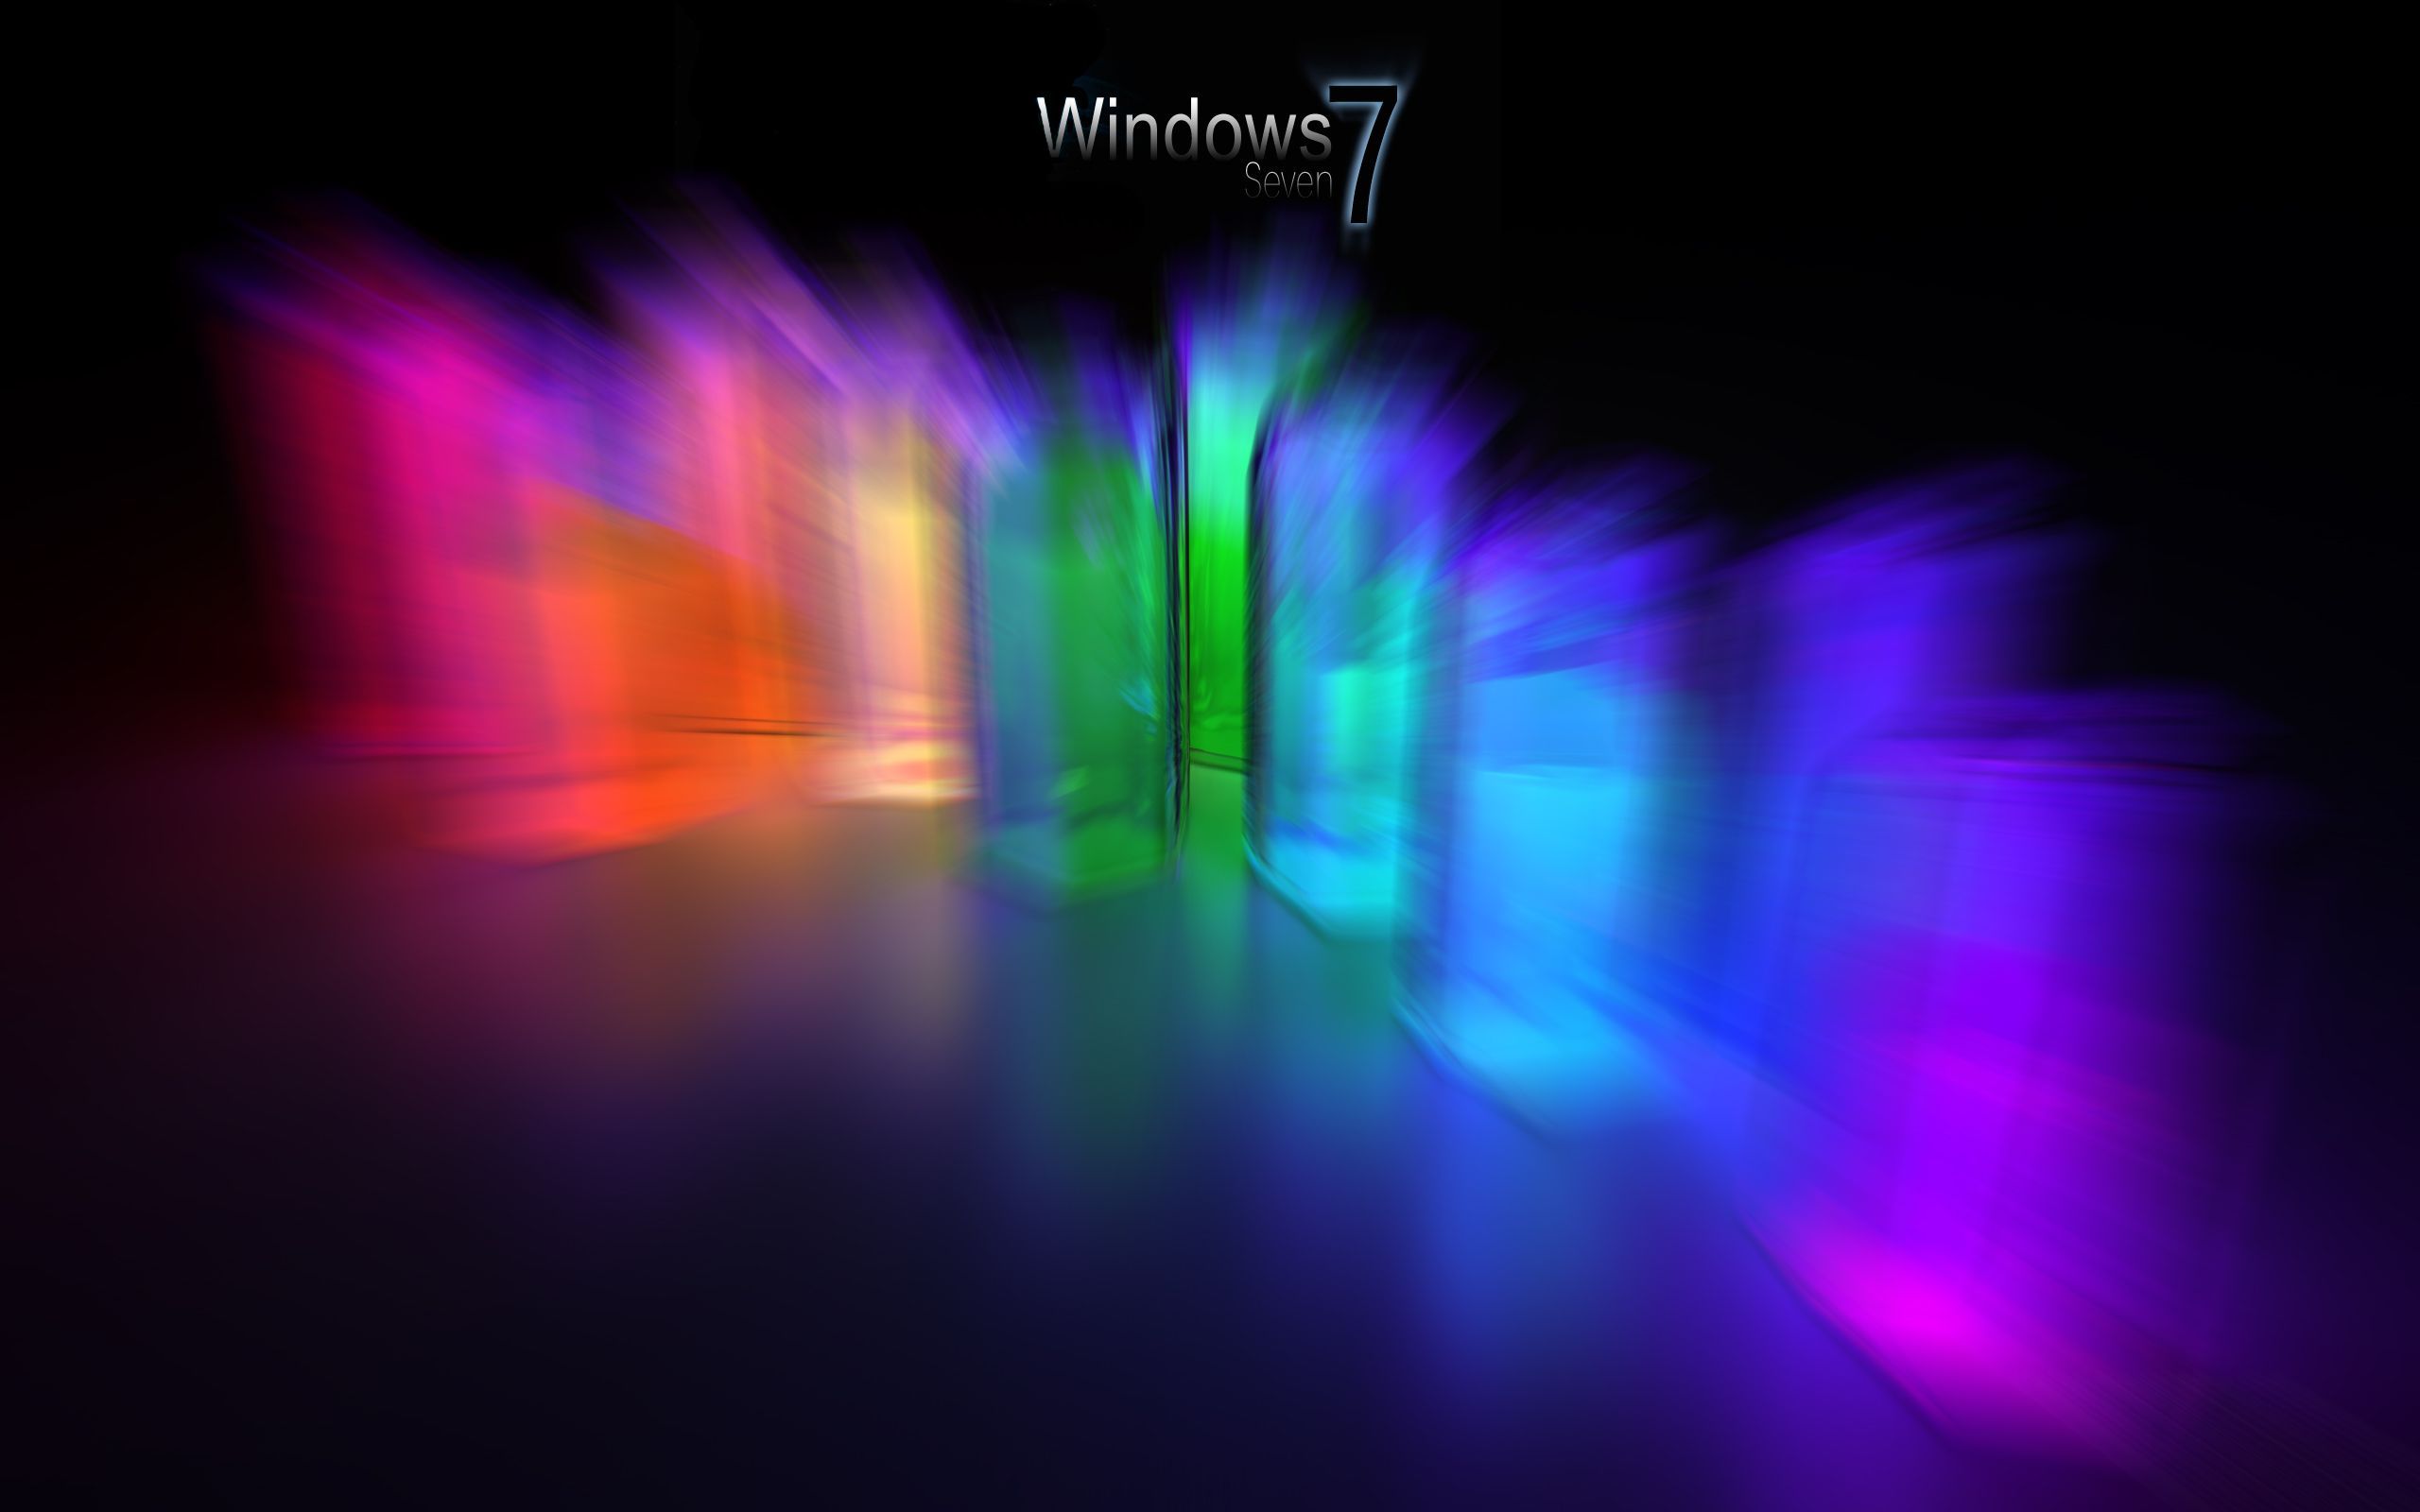 Win 7 Background Windows 7 Wallpapers13.com